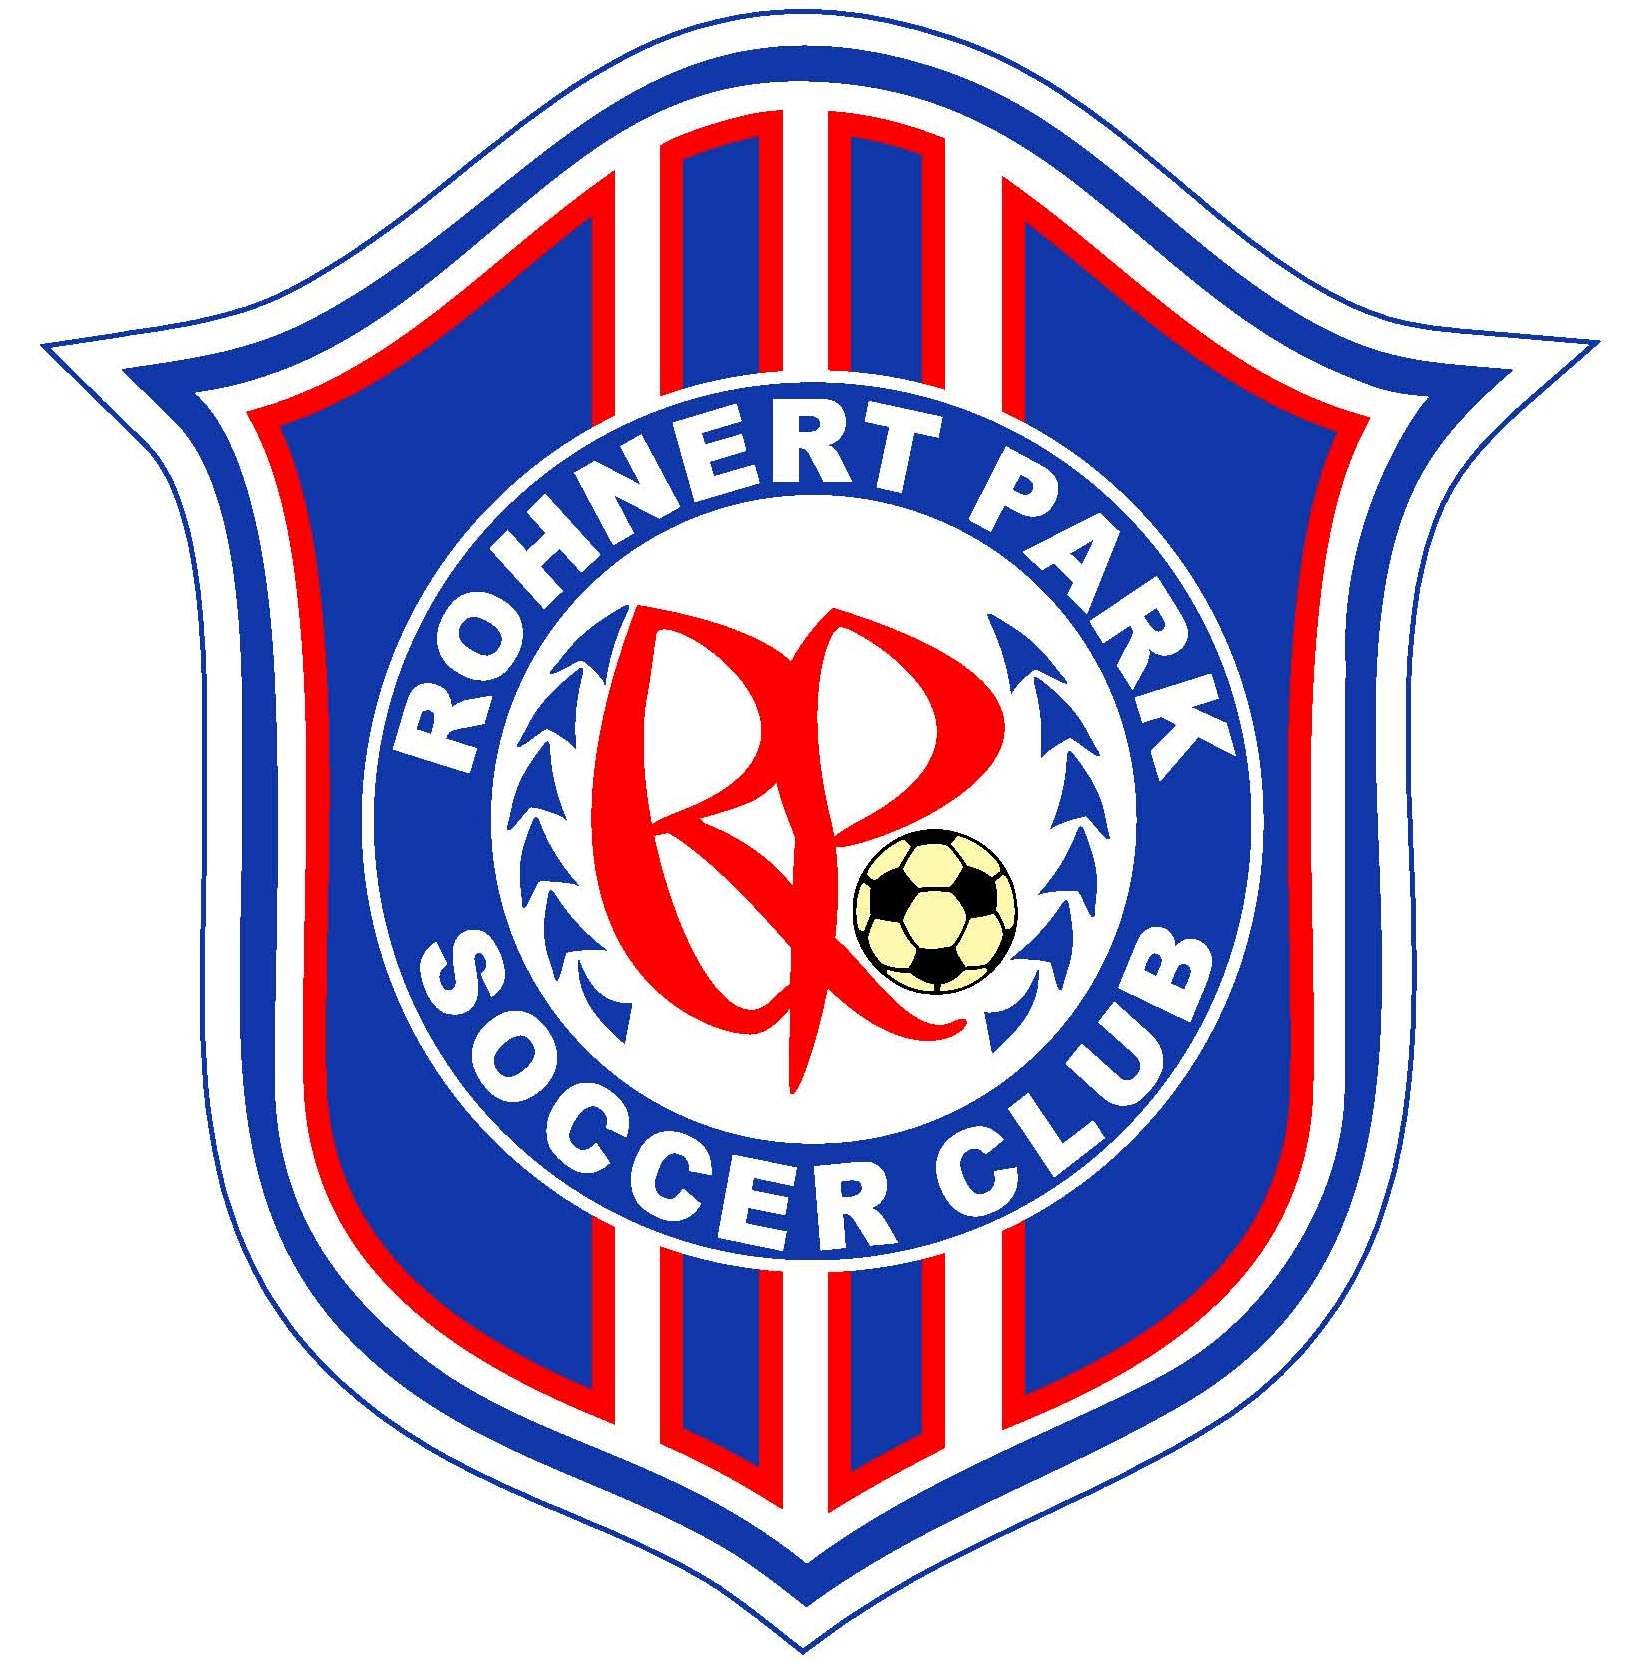 Rohnert Park SC team badge